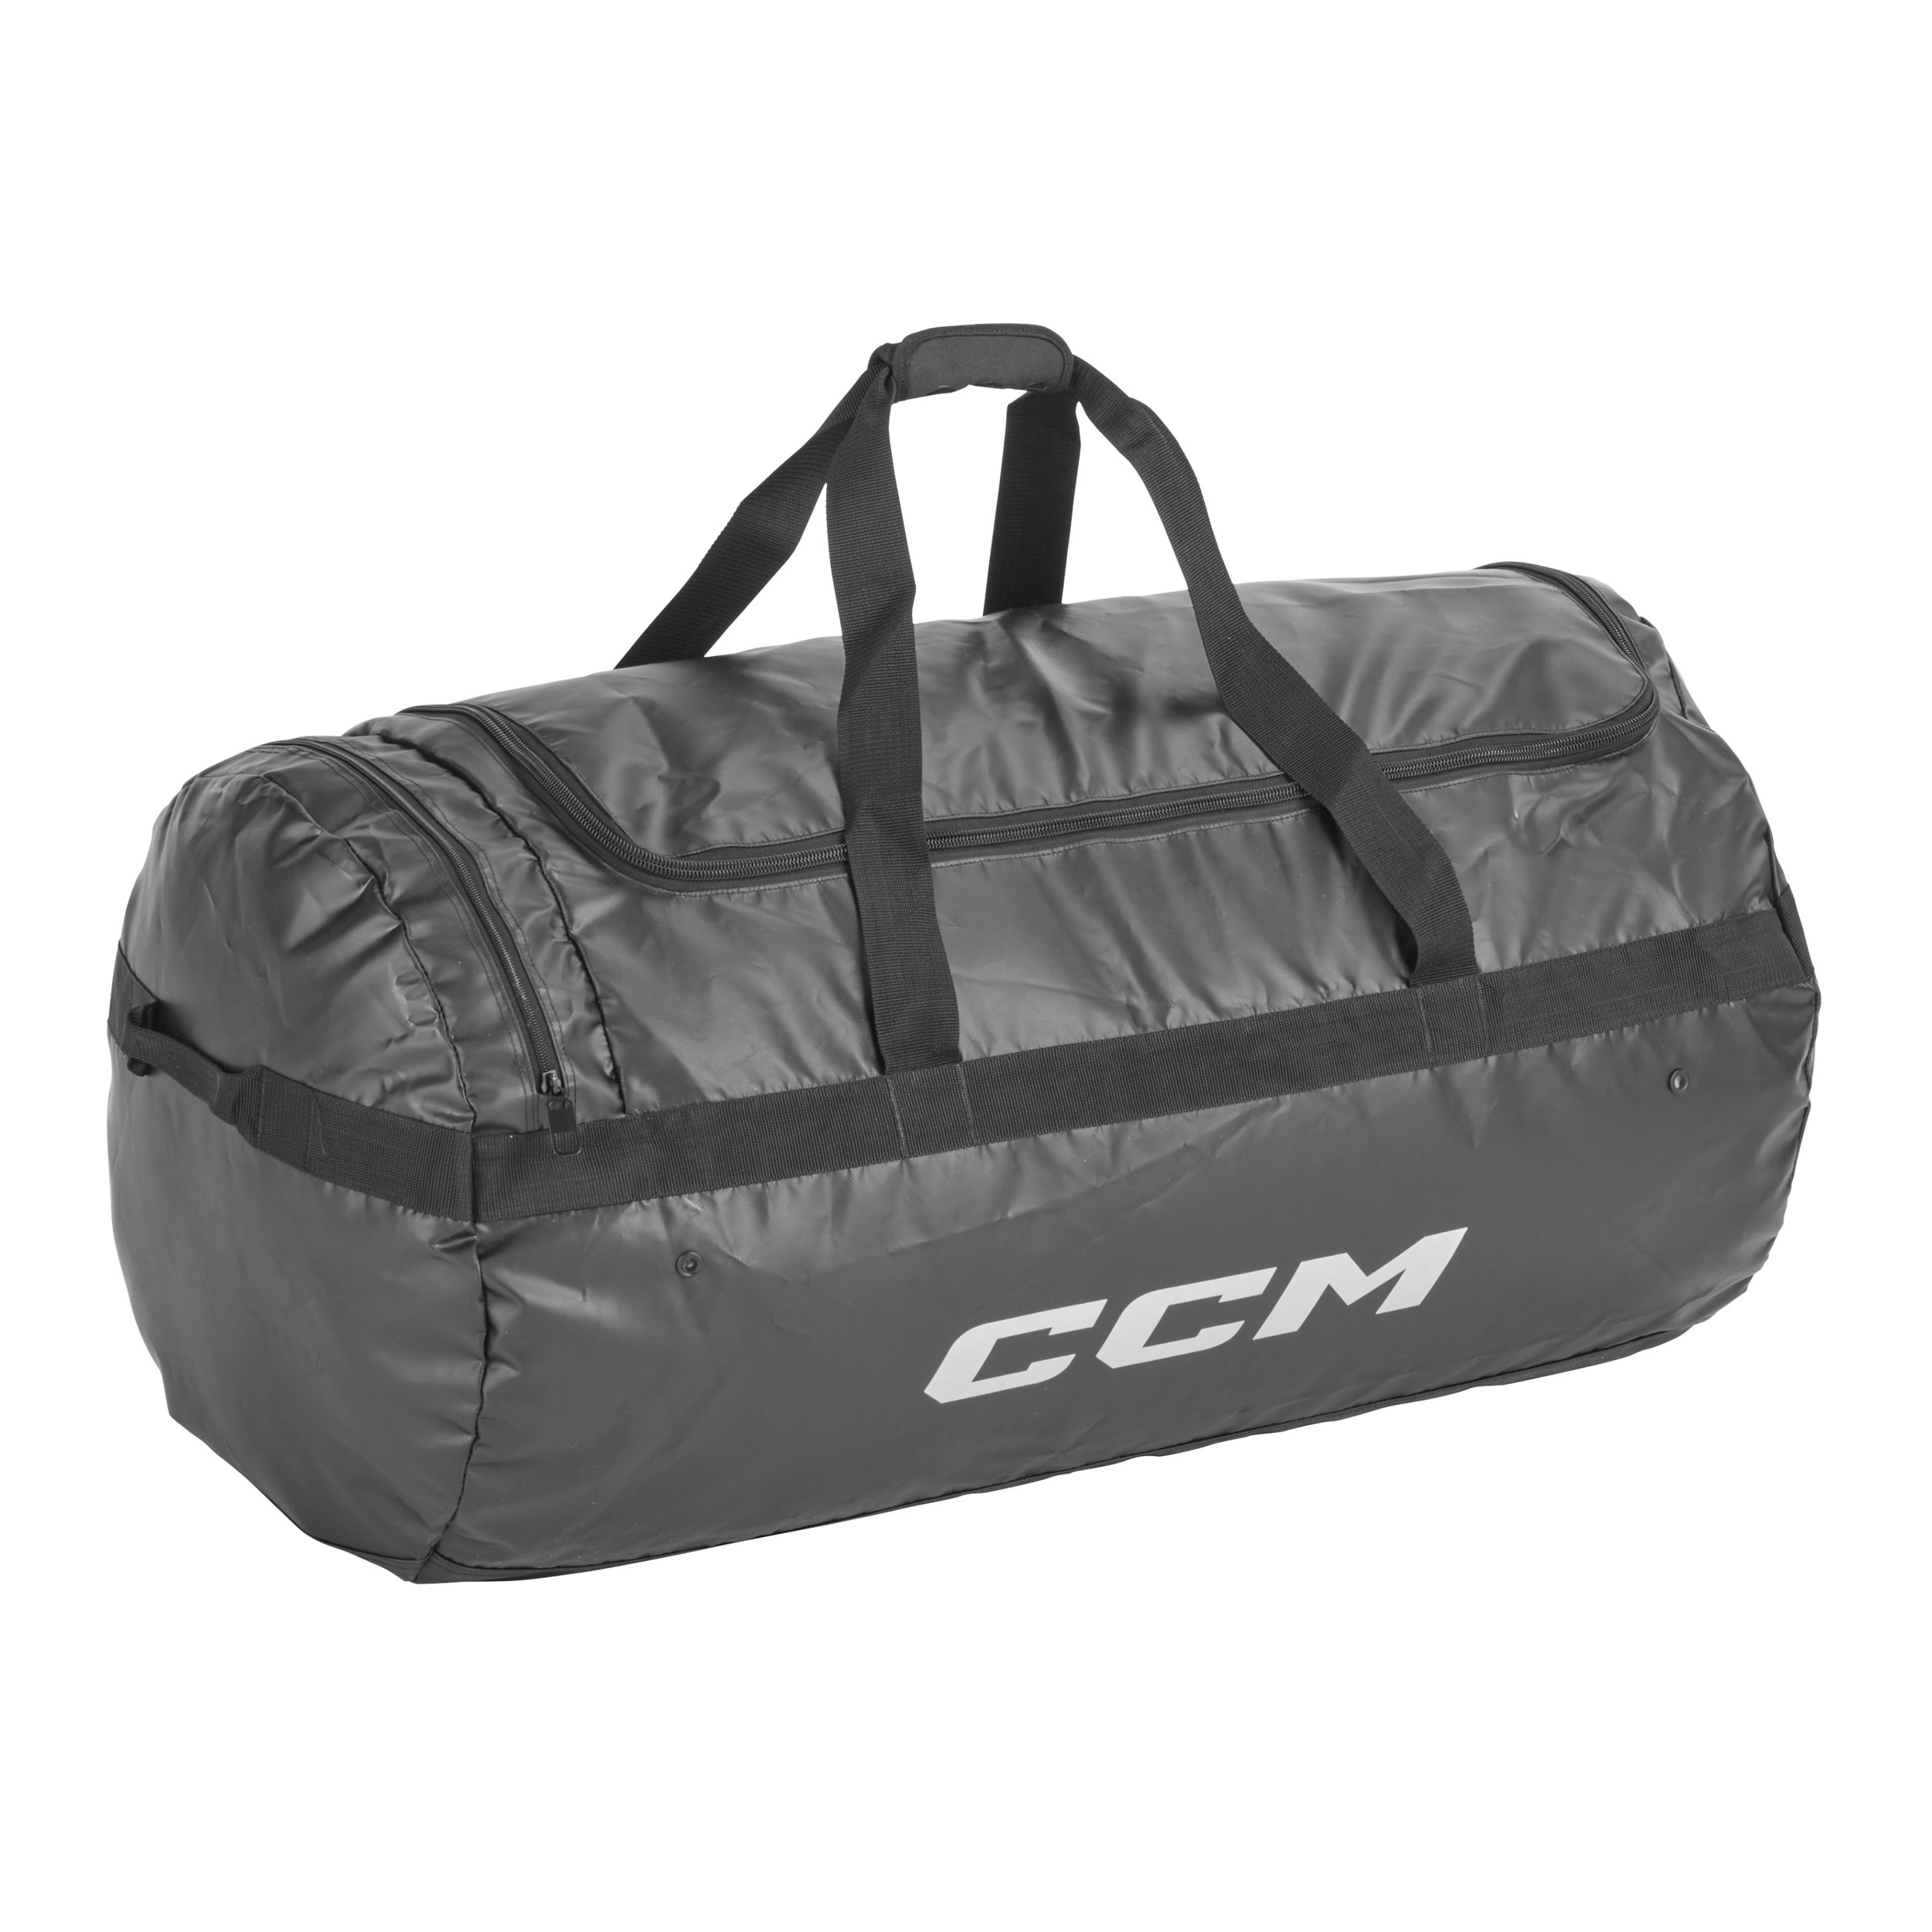 Image of CCM 450 Player 32 Inch Senior Hockey Carry Bag